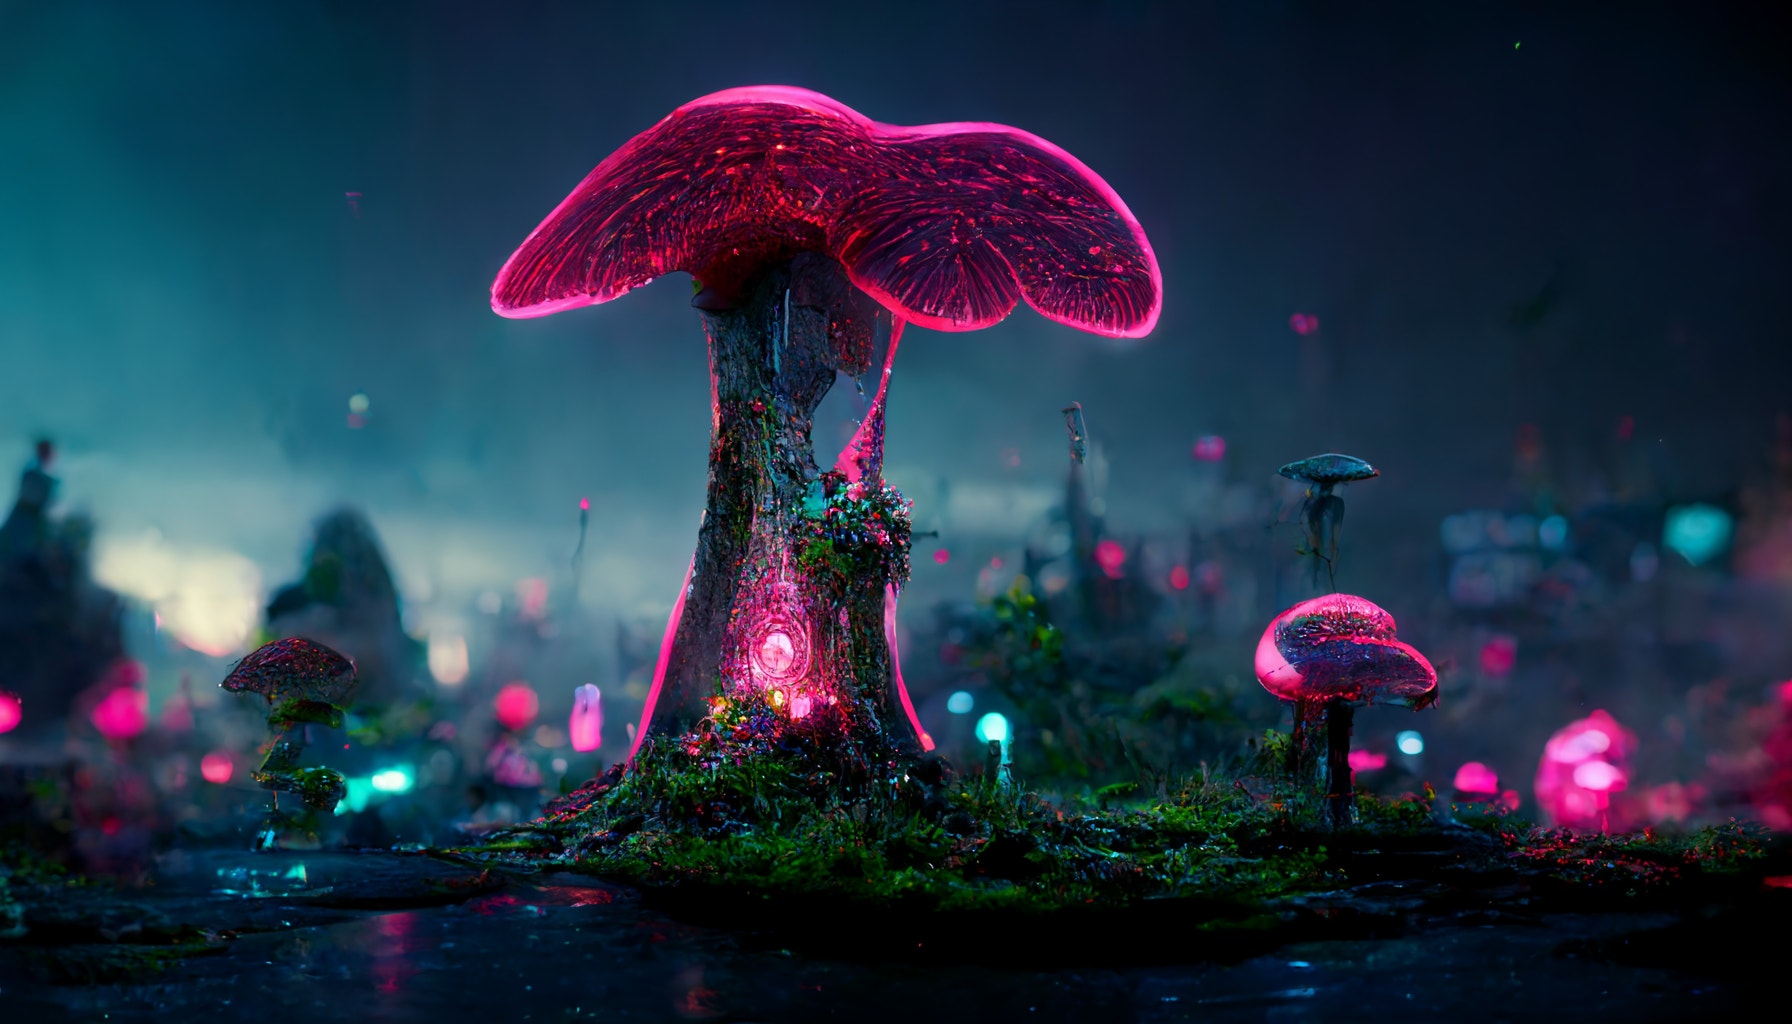 Galaxy mushroom